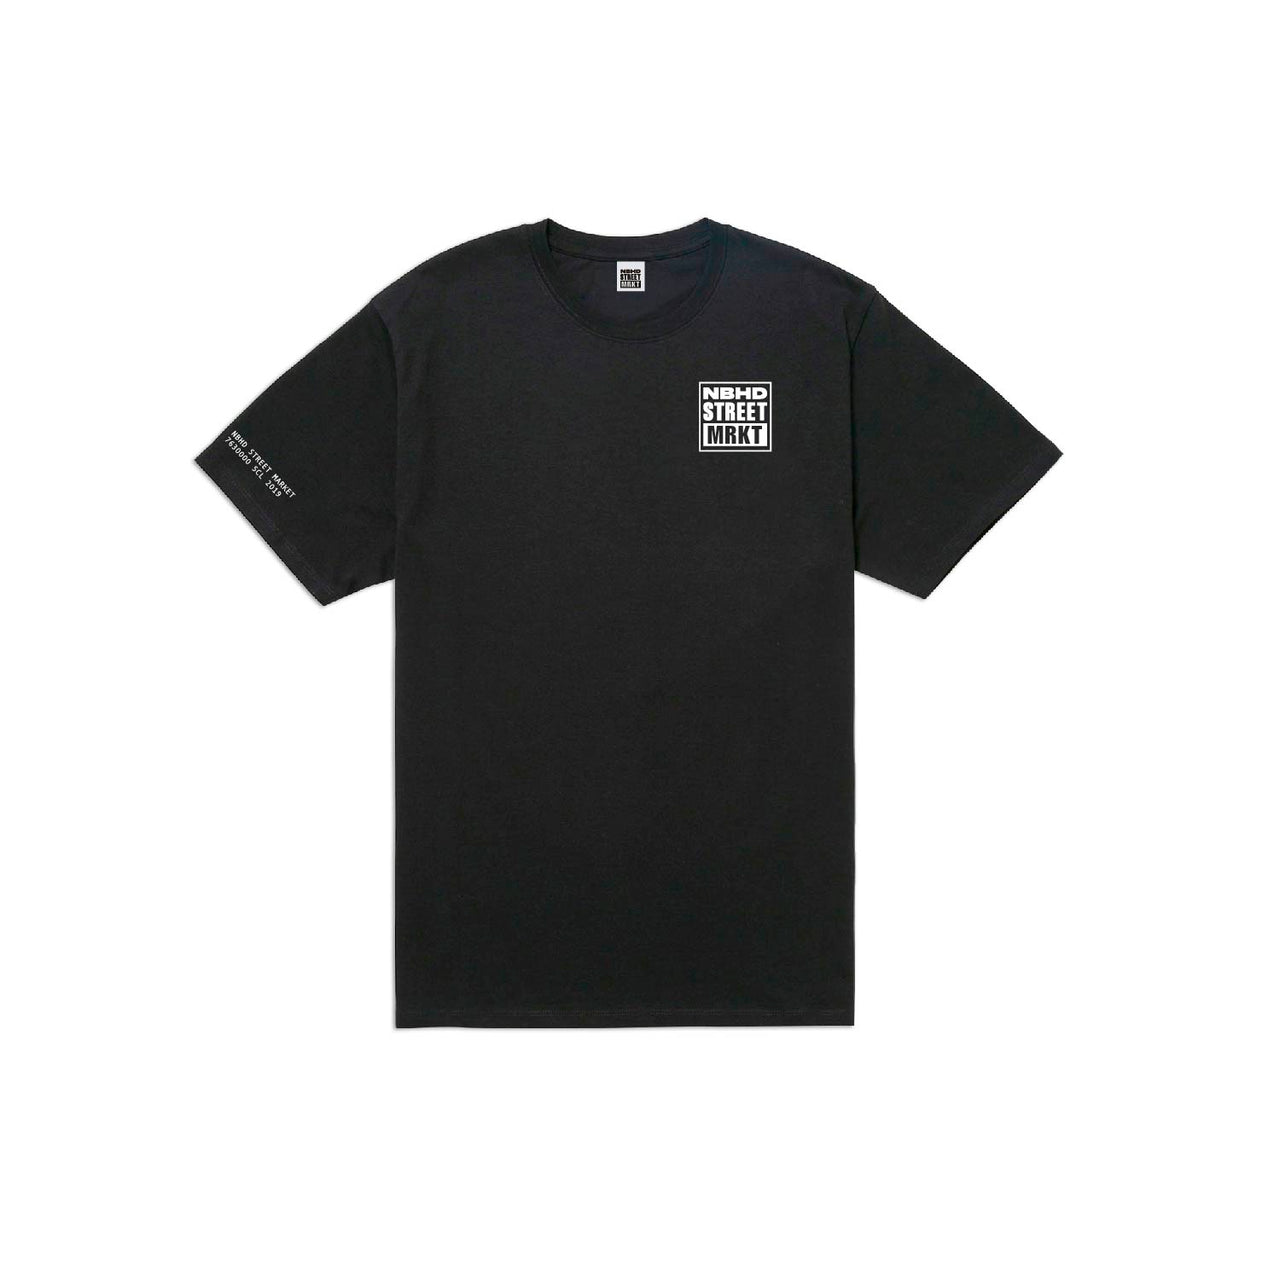 Streetmarket Box T-shirt Black